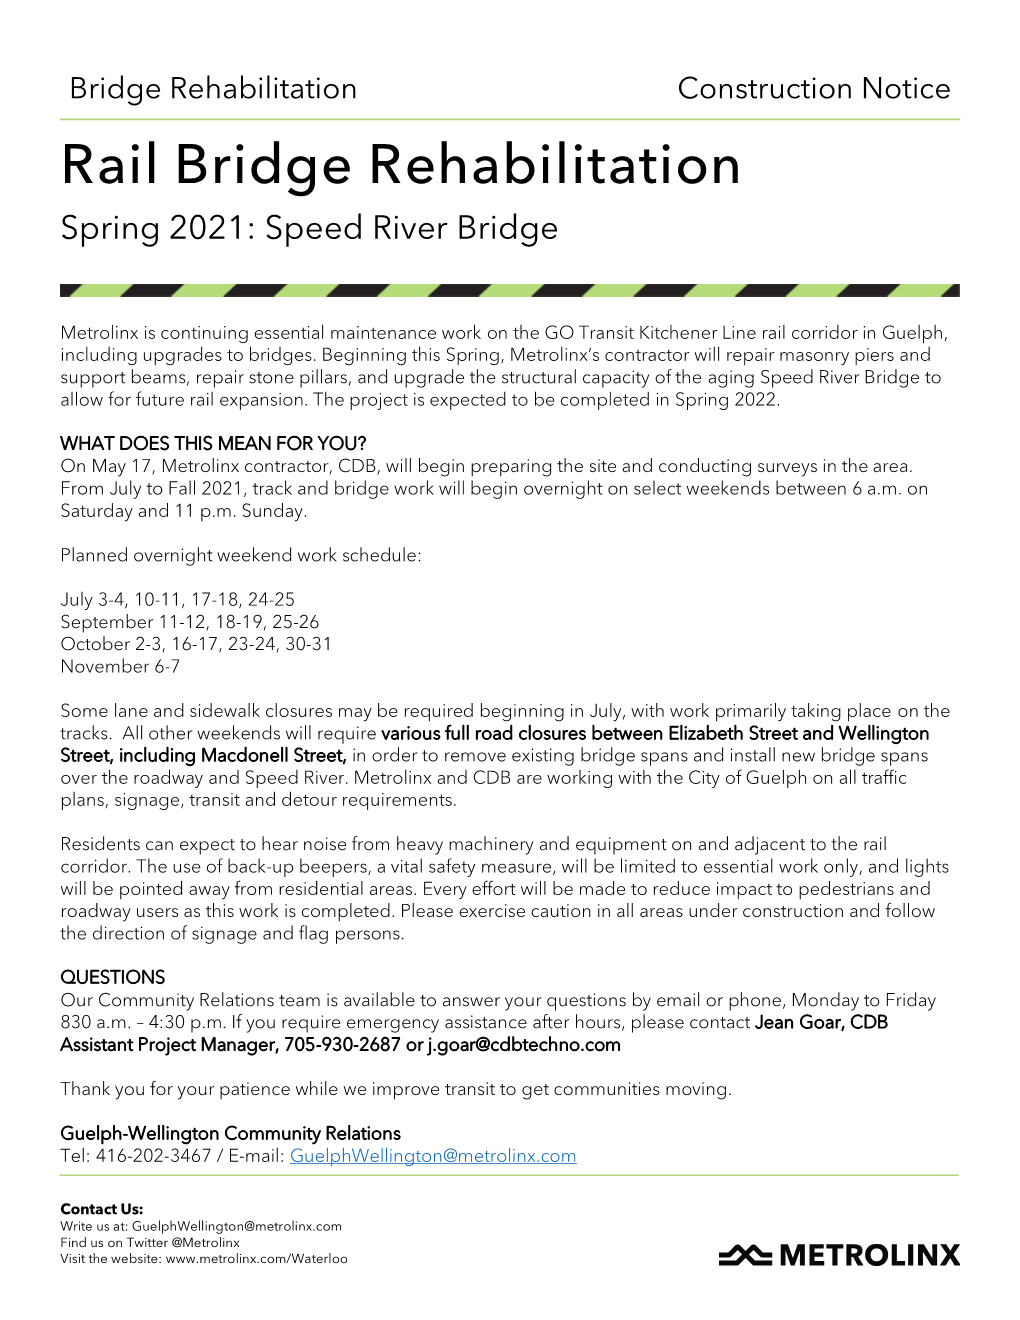 Rail Bridge Rehabilitation Spring 2021: Speed River Bridge